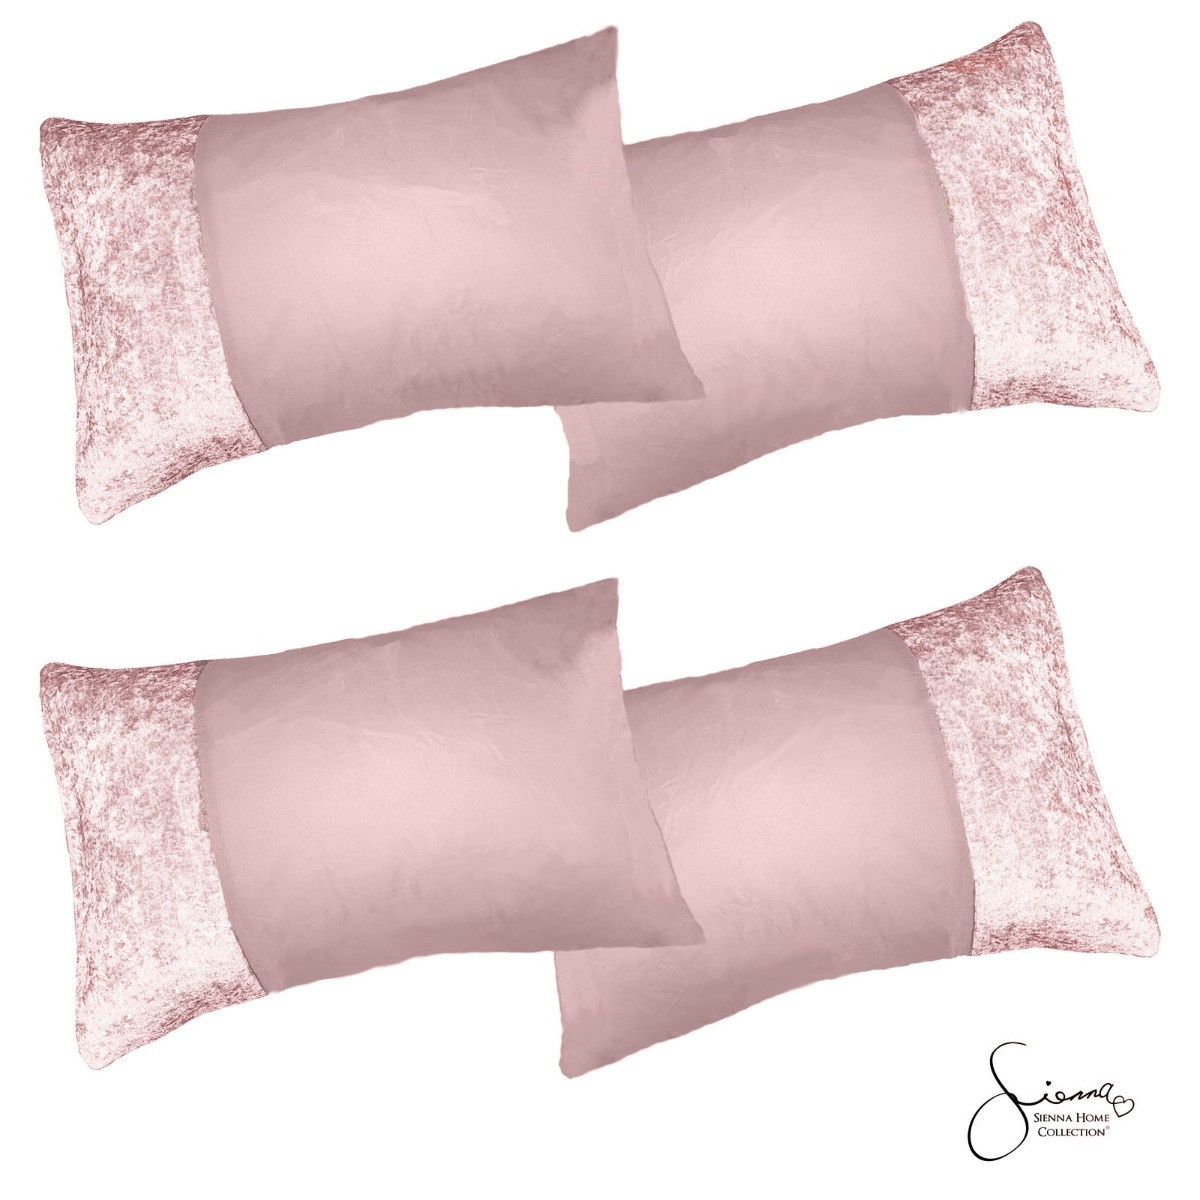 Sienna Crushed Velvet Band 4 Pack of Pillowcases - Blush Pink>